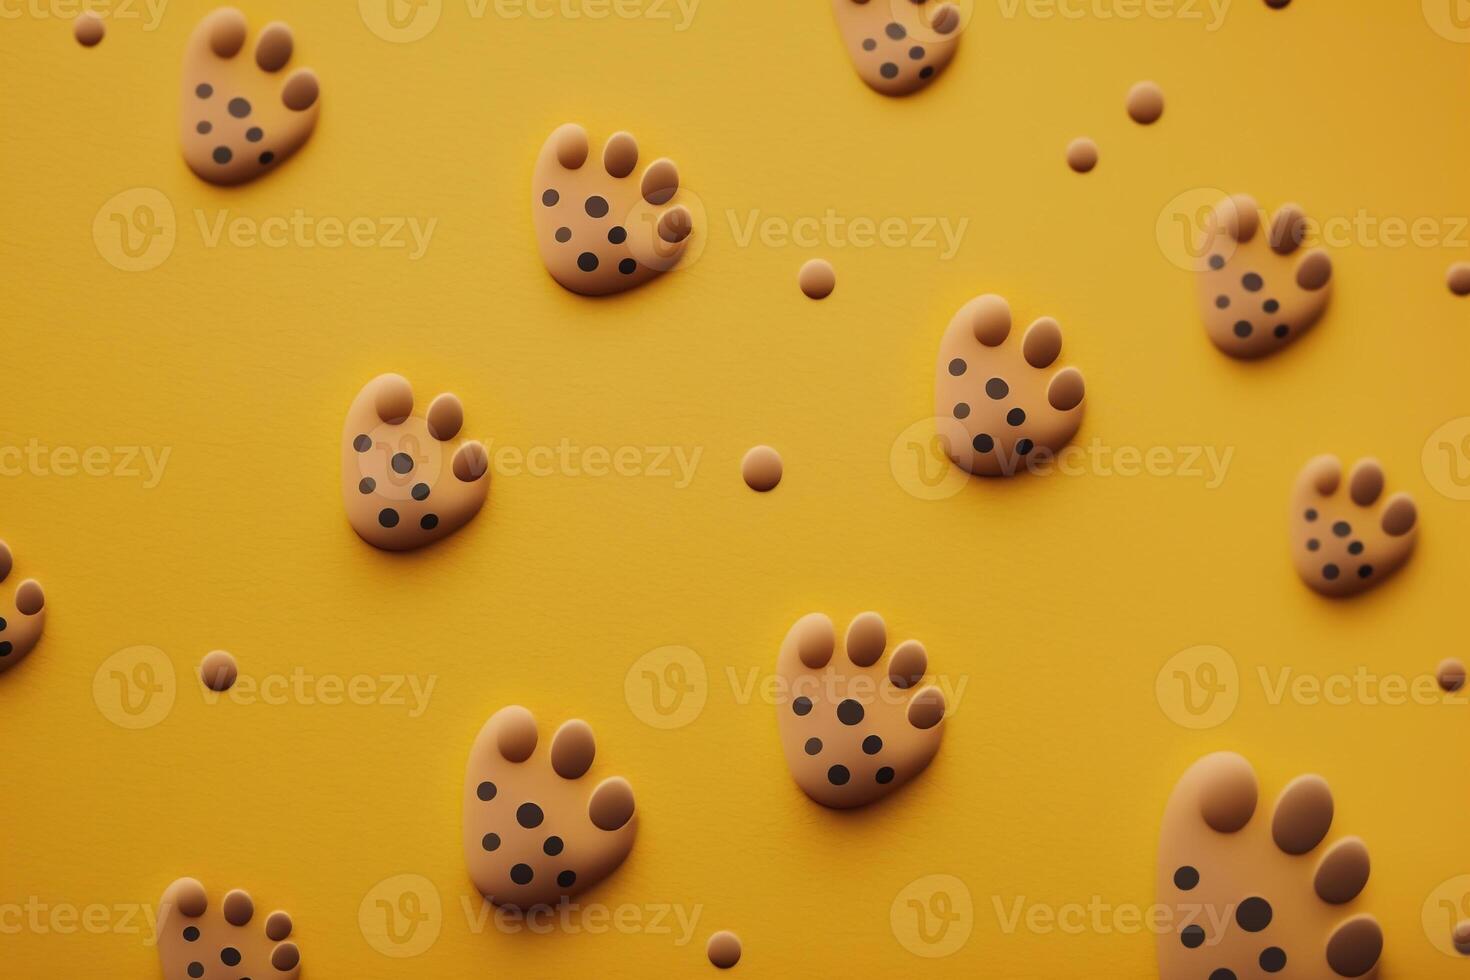 dog paw prints on yellow background photo